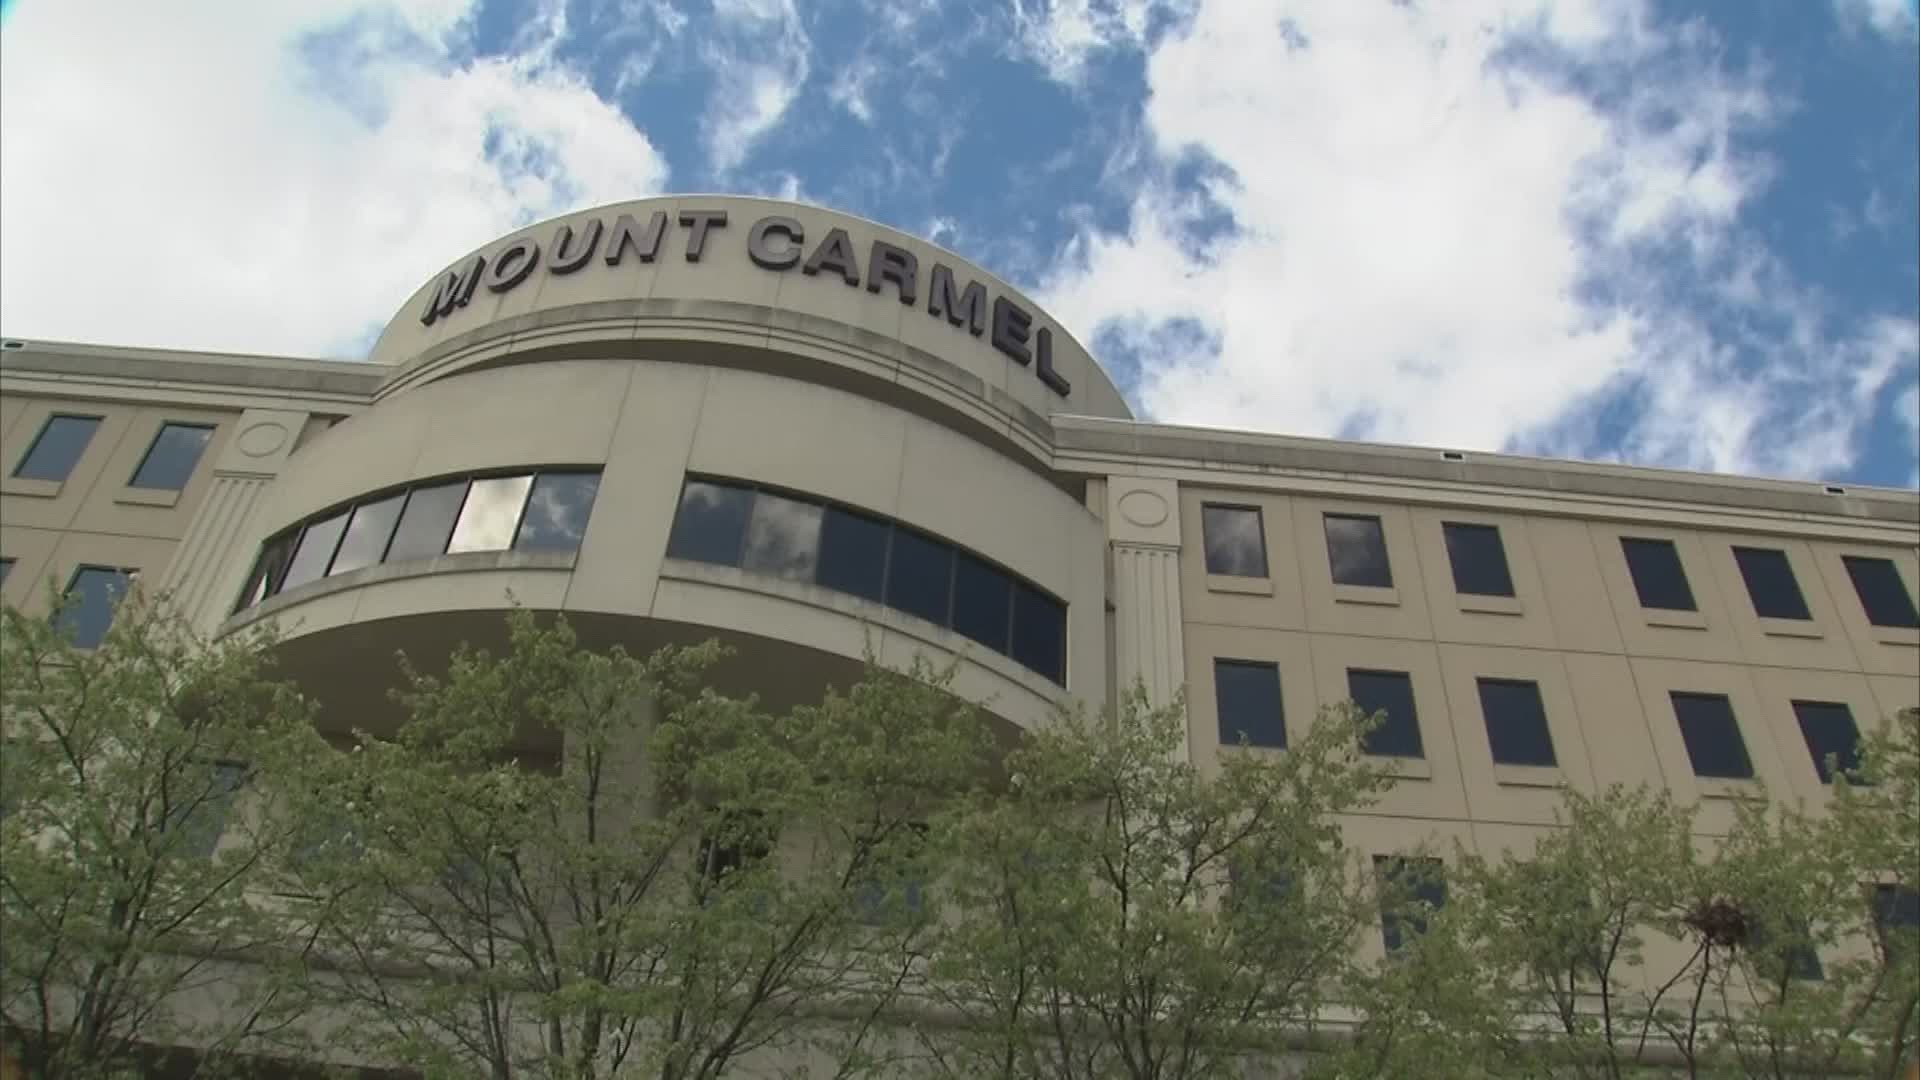 A dosing scandal has cost Mount Carmel more than $14 million so far.